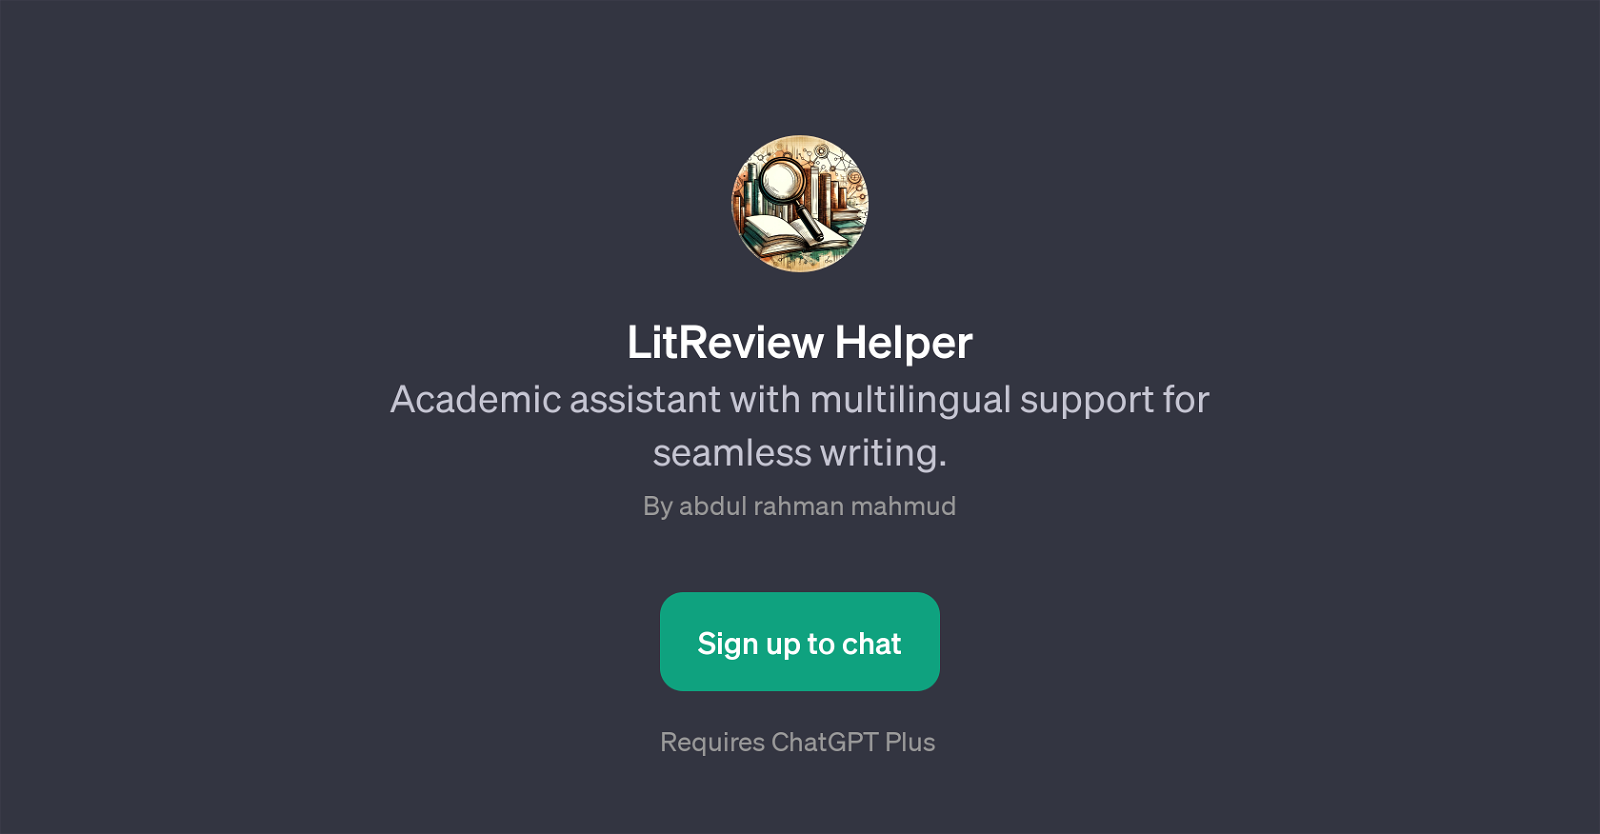 LitReview Helper website